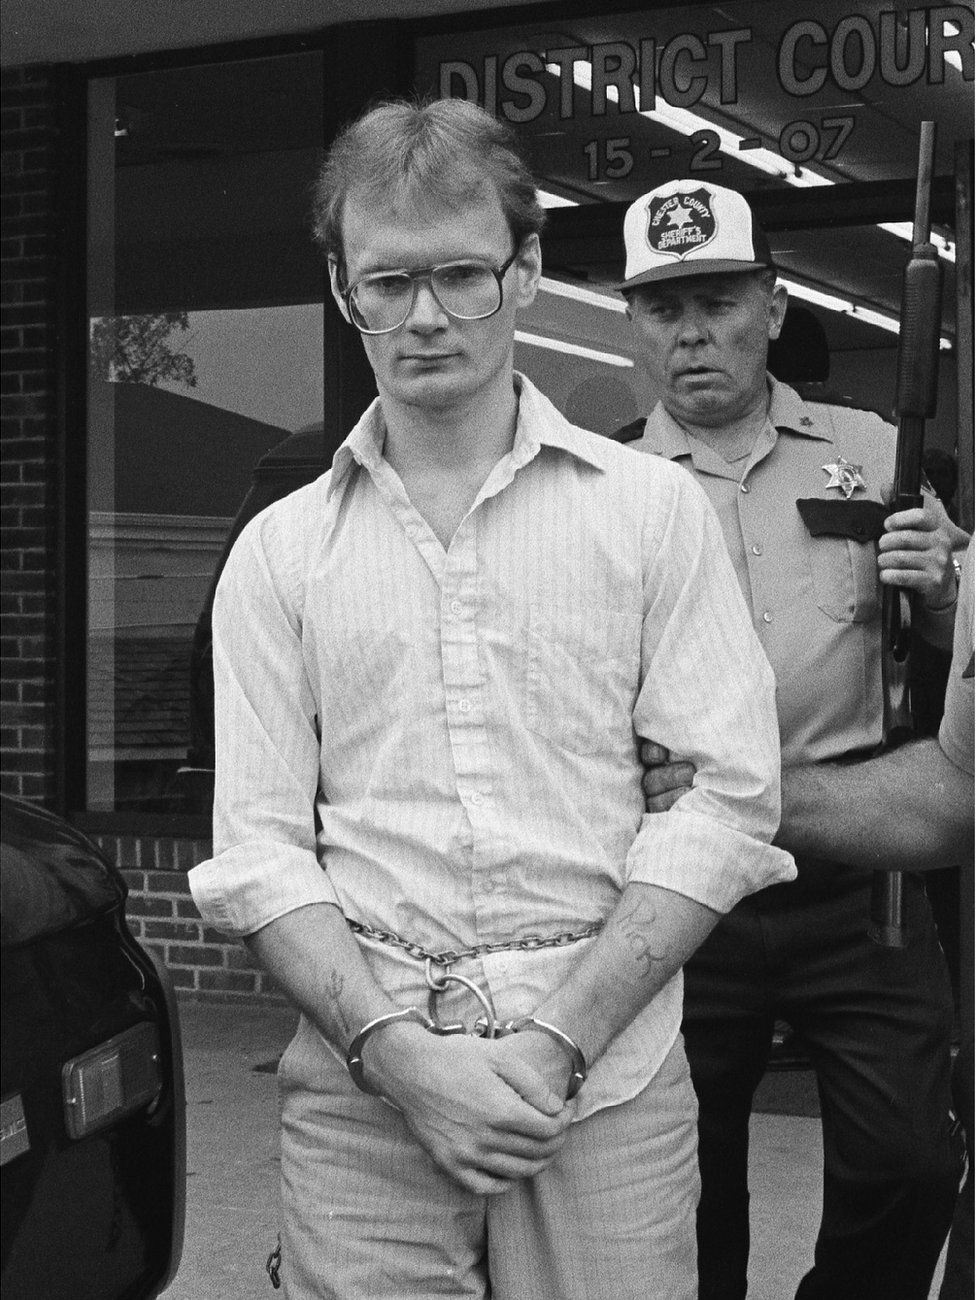 Nick Yarris in handcuffs